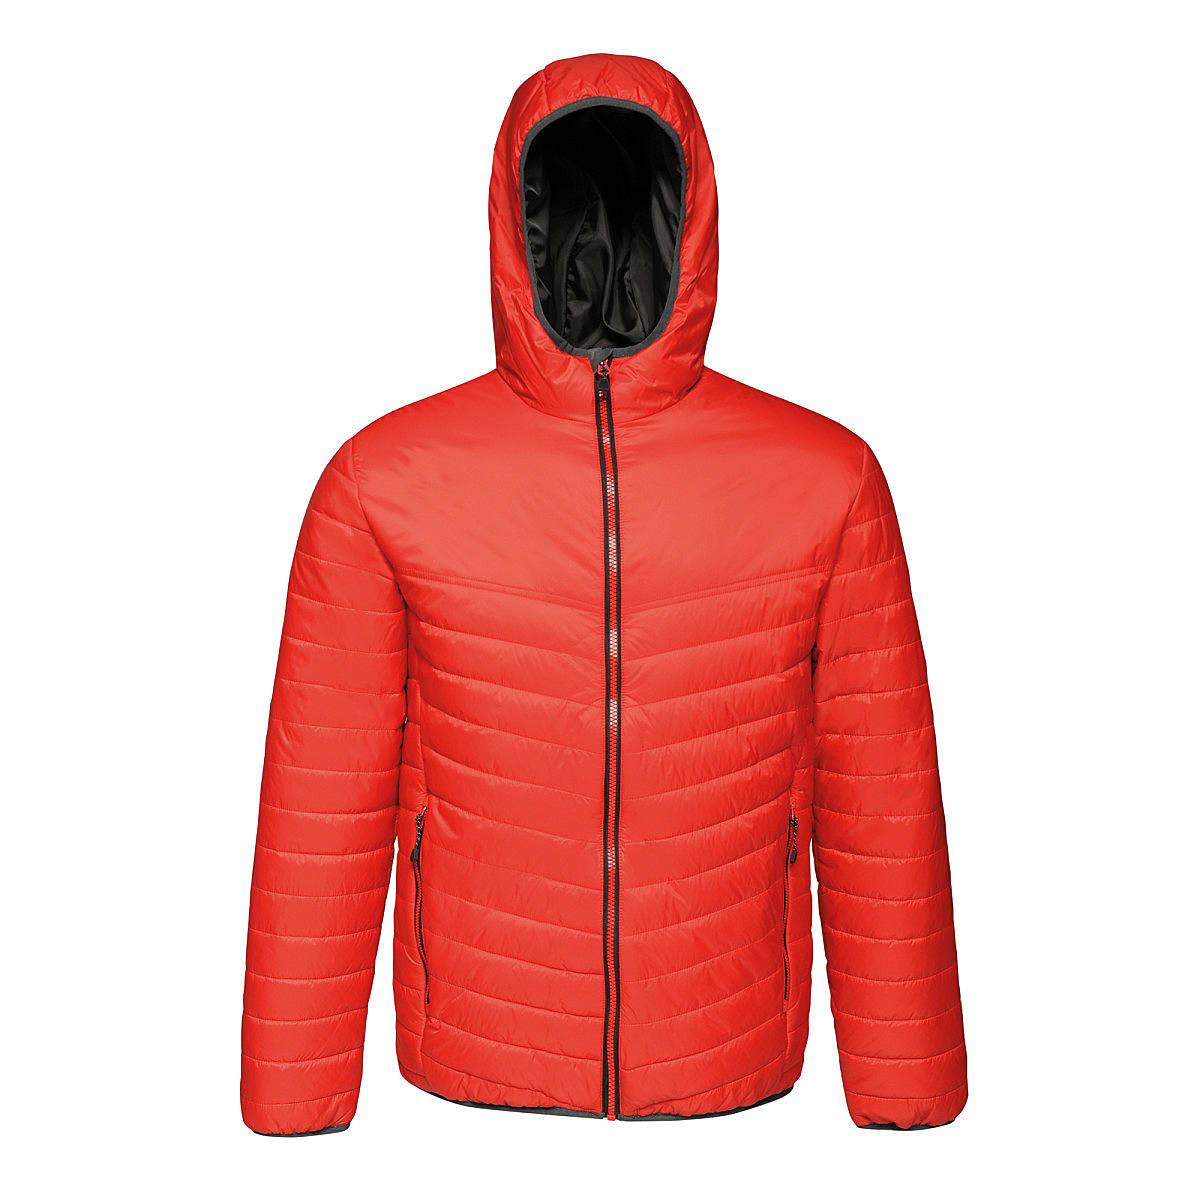 Regatta Mens Acadia II Jacket in Classic Red / Black (Product Code: TRA420)